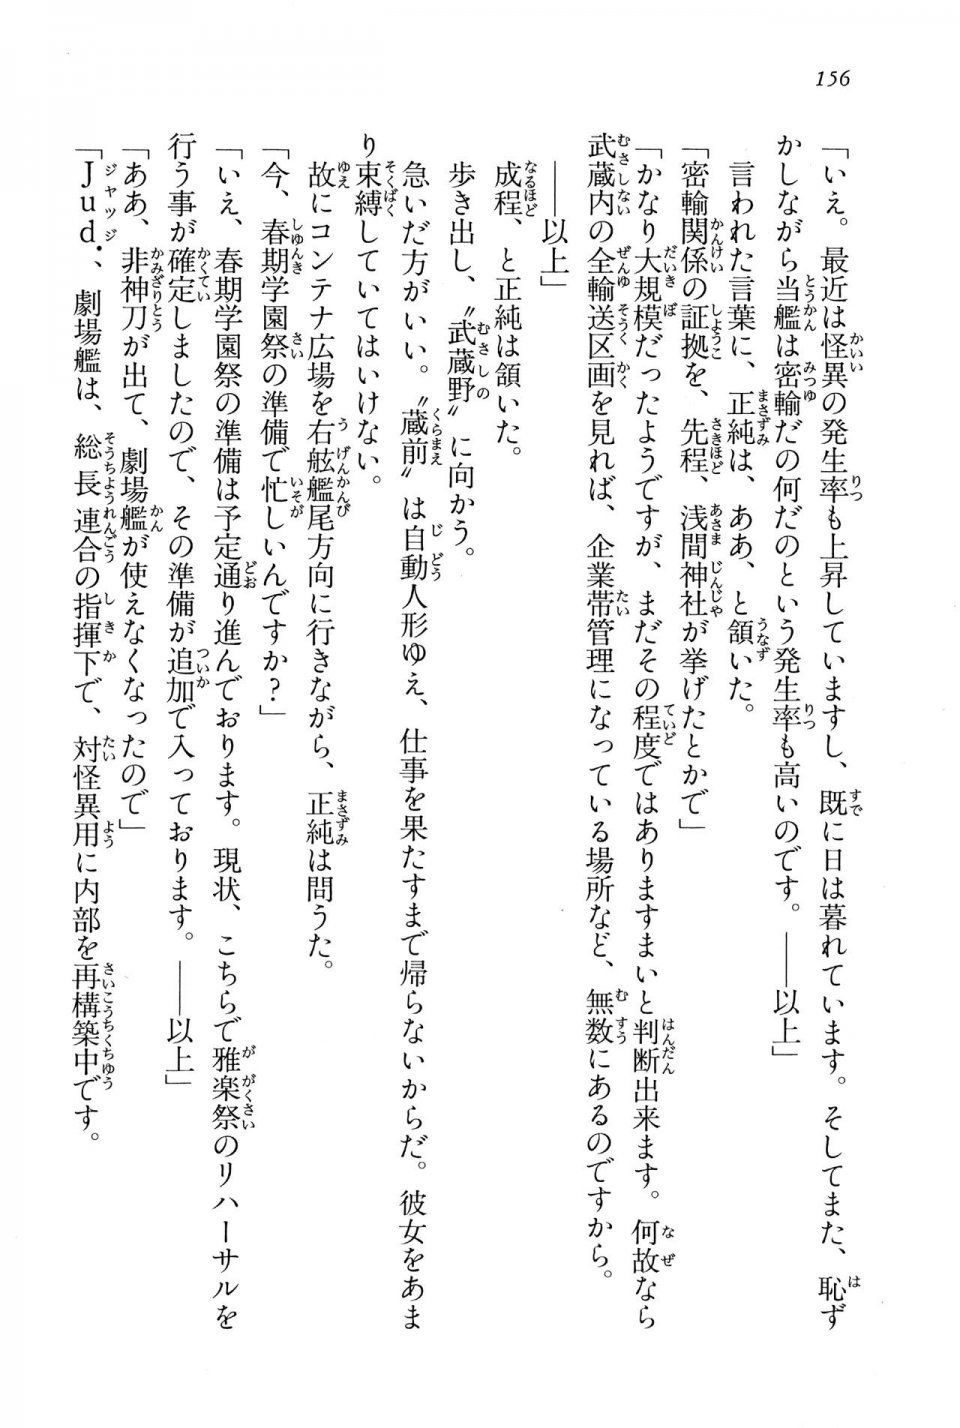 Kyoukai Senjou no Horizon BD Special Mininovel Vol 6(3B) - Photo #160